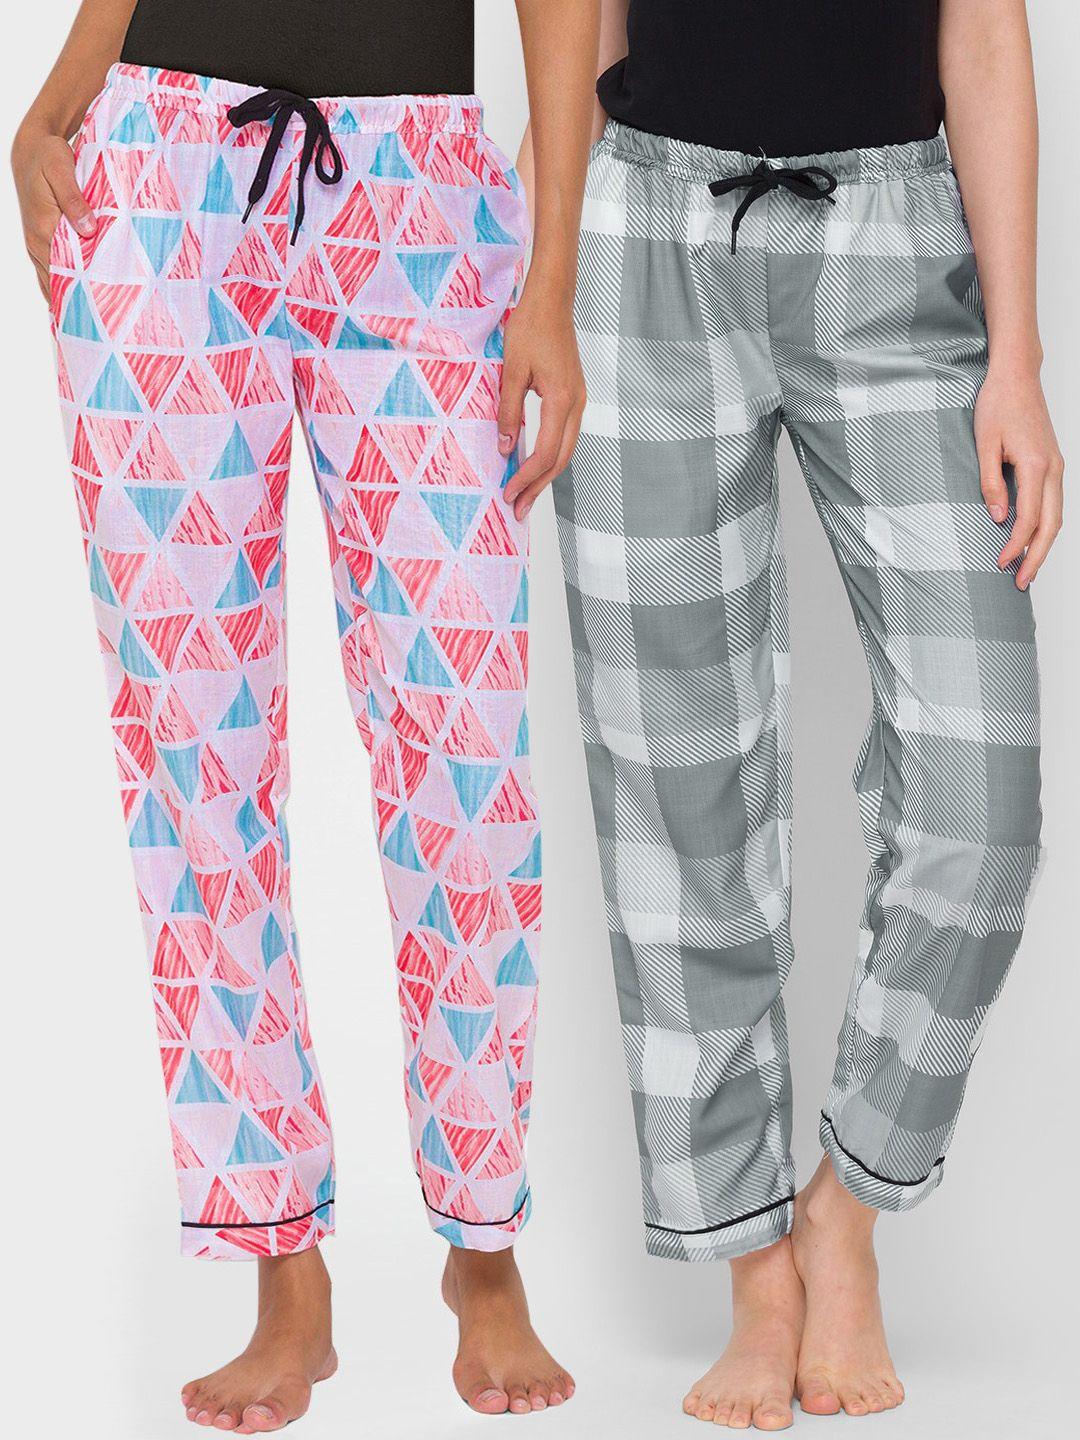 fashionrack women pack of 2 printed lounge pants